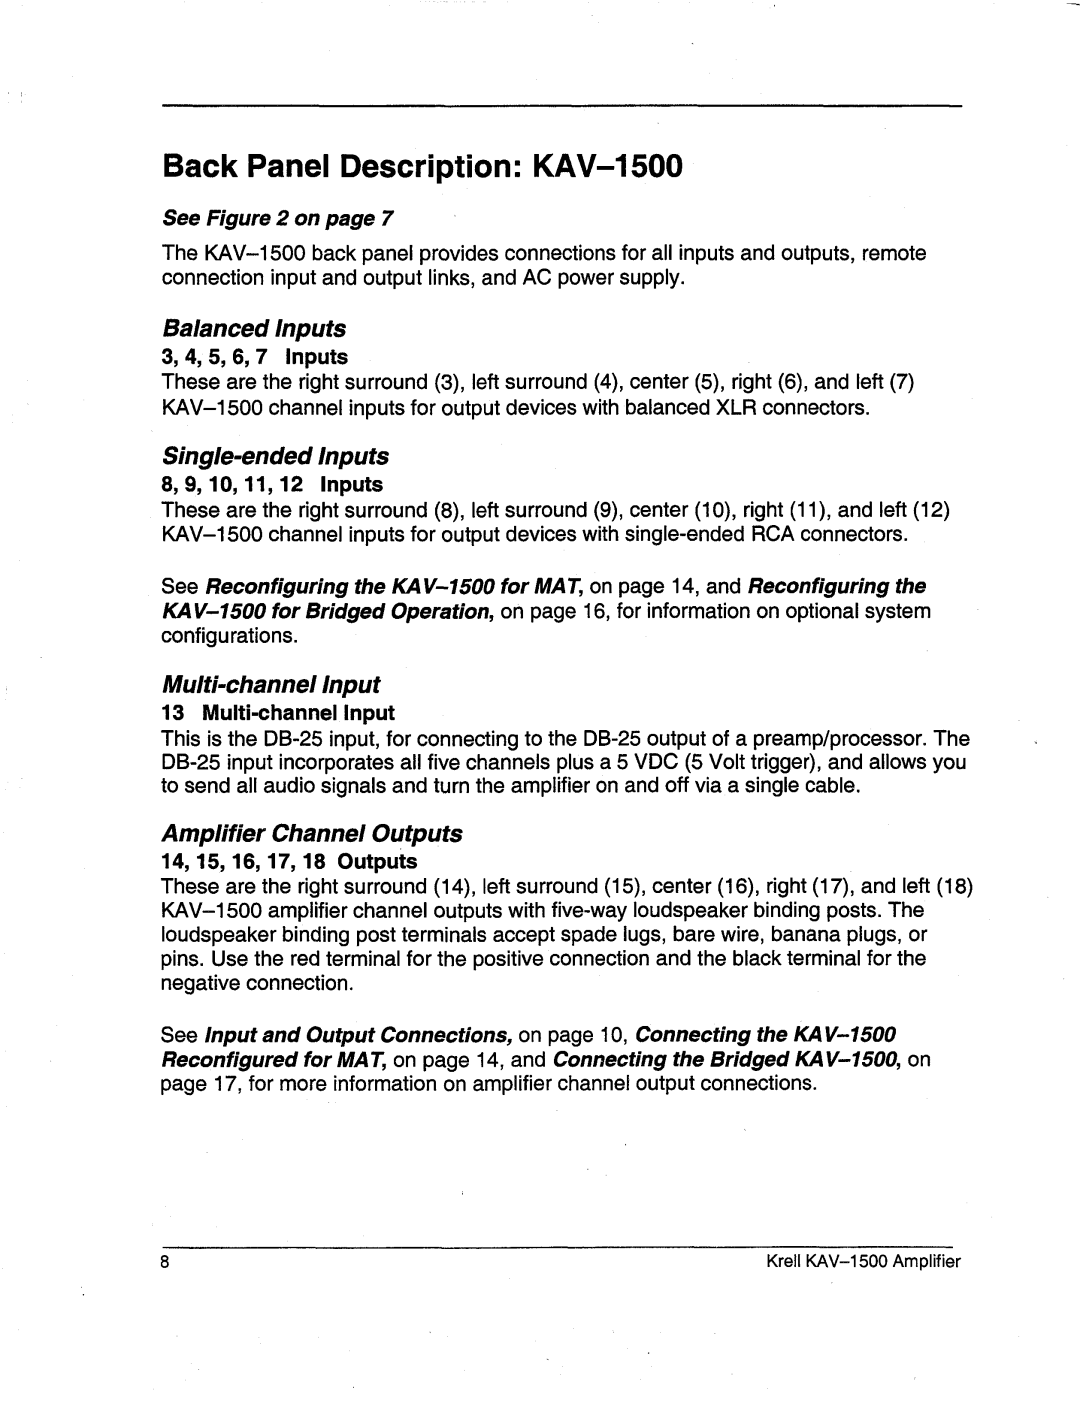 Krell Industries BackPanel Description KAV-1500, 8, 9, 10, 11, 12 Inputs, Multi-channelInput, SeeFigure 2 on page7 